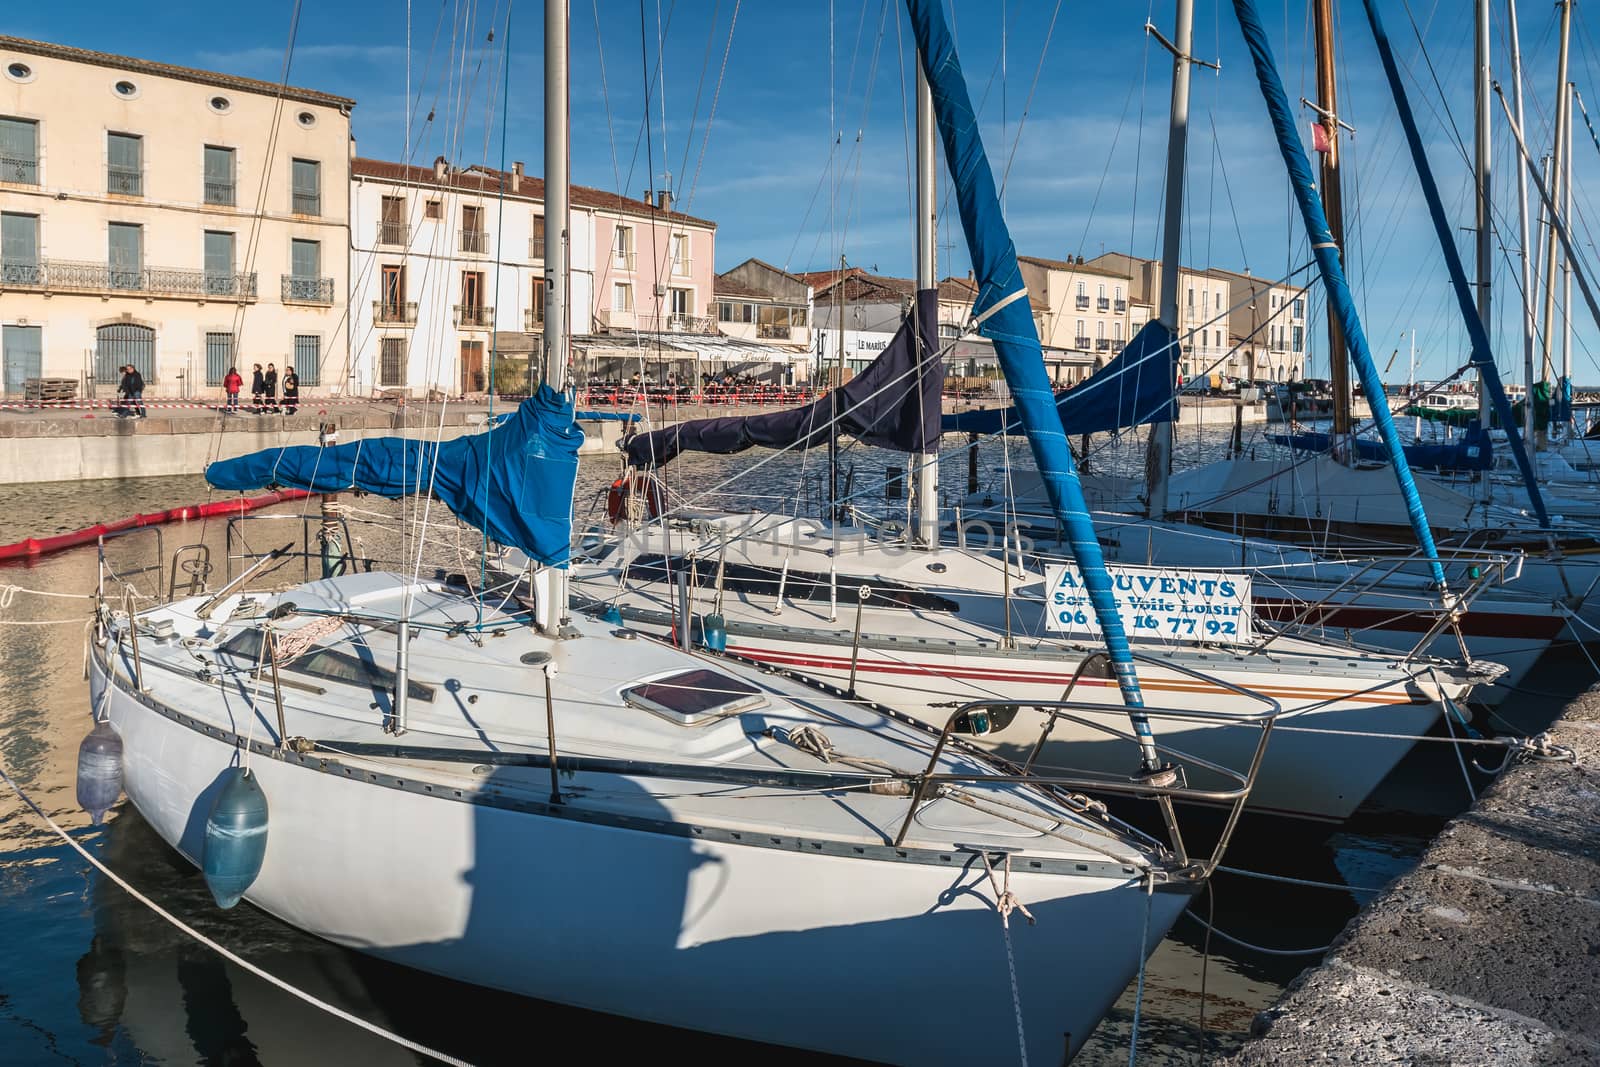 Pleasure boat docked in the small port of Marseillan by AtlanticEUROSTOXX